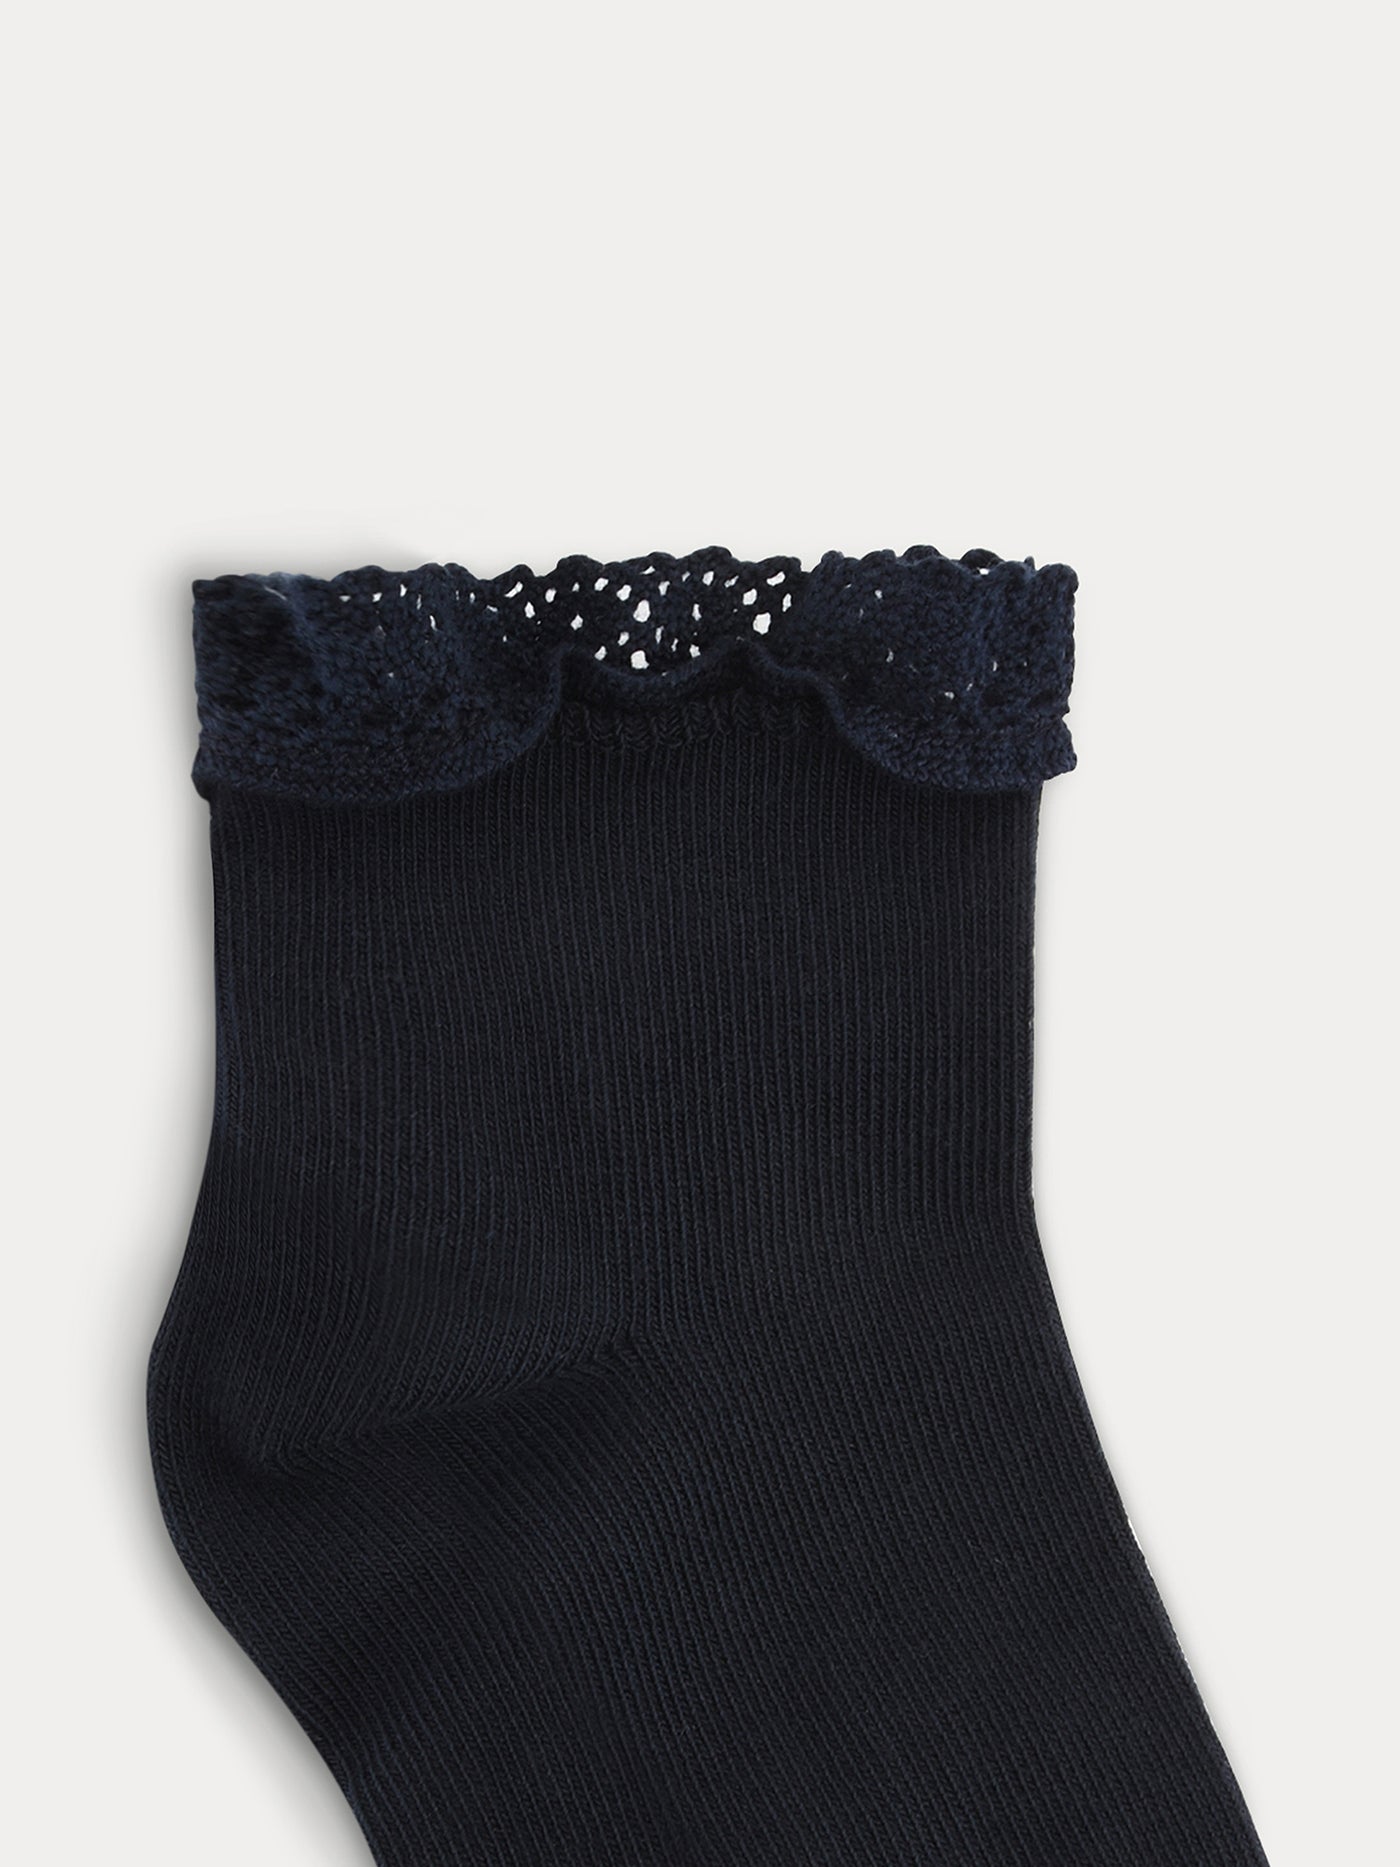 Girls' Lace Socks navy